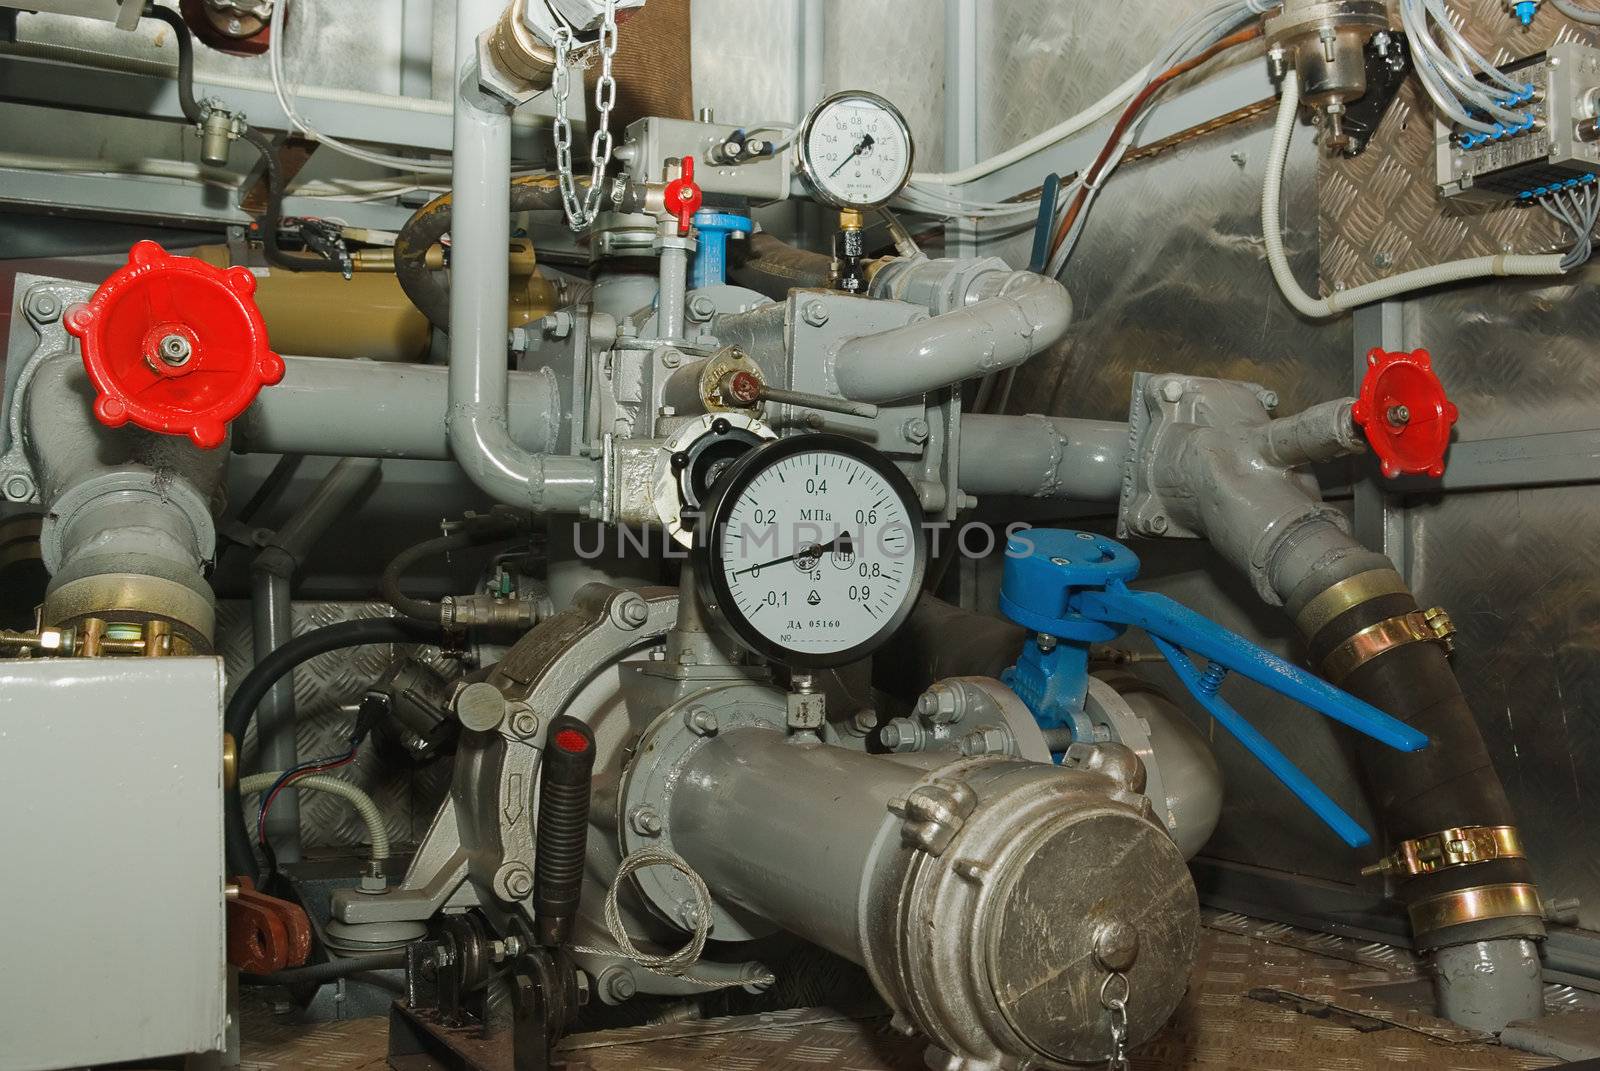 Complex pumping and valve controls on a pumper firetruck.